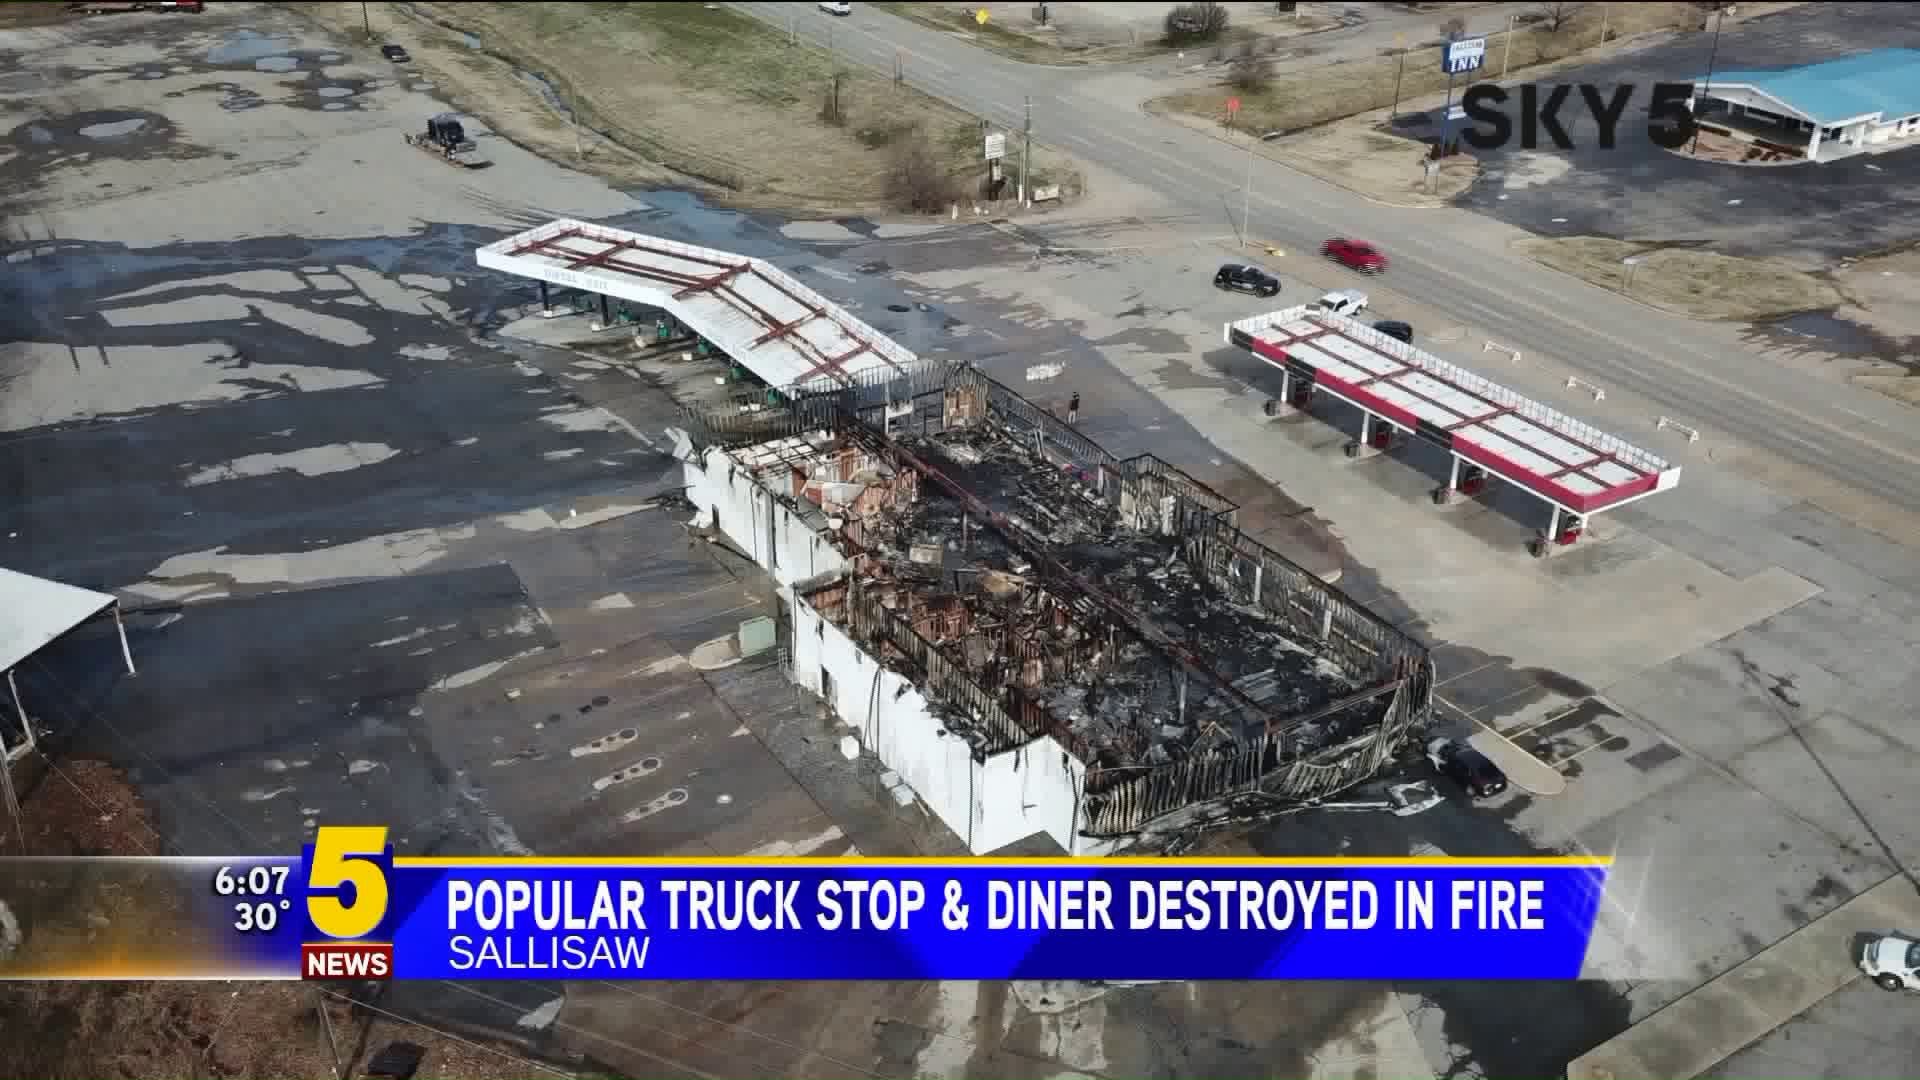 Popular Truck Stop & Diner In Sallisaw Destroyed In Fire